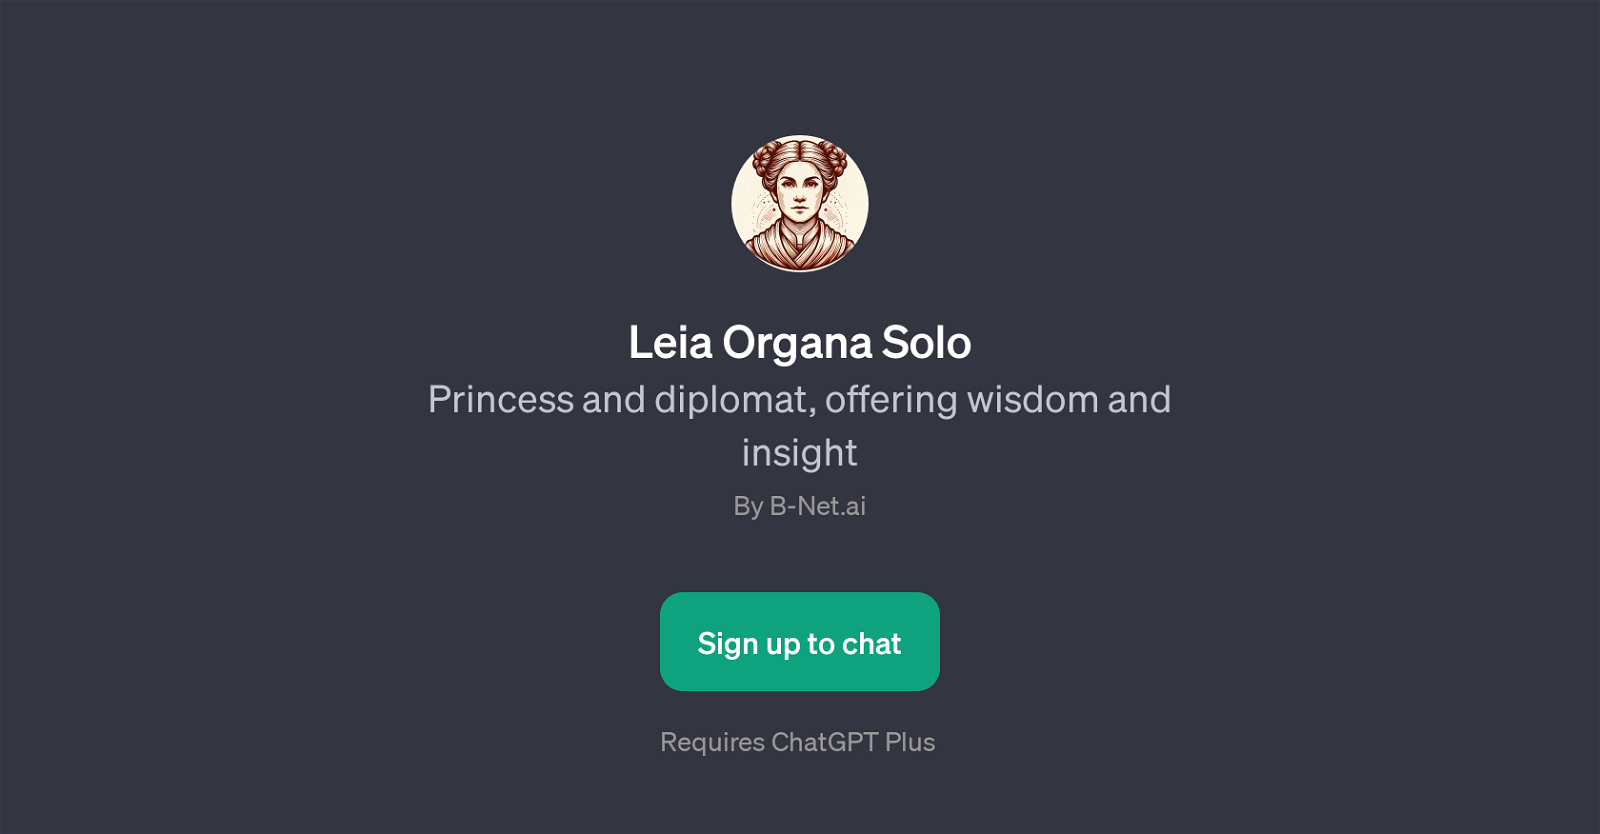 Leia Organa Solo website